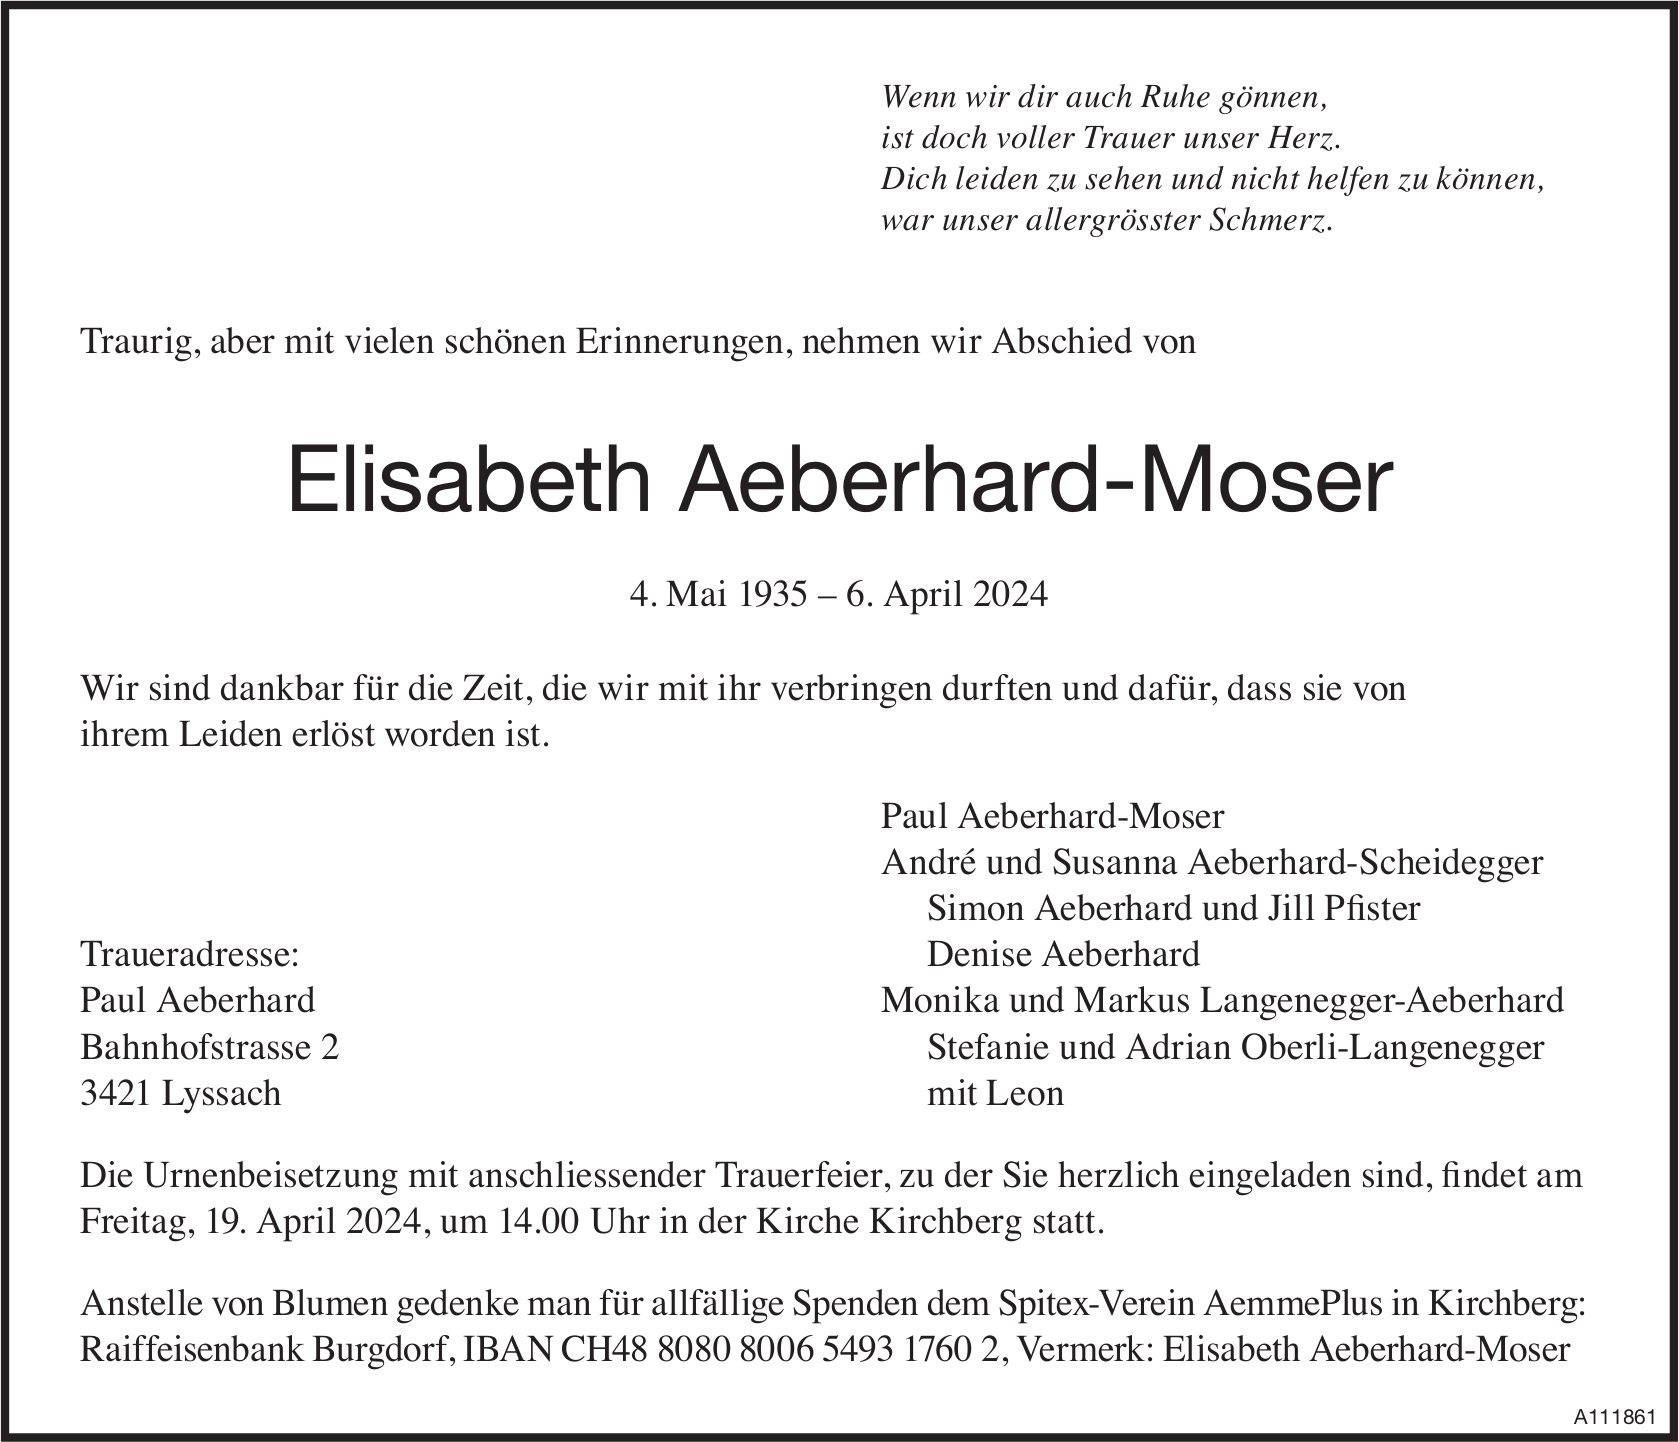 Elisabeth Aeberhard-Moser, April 2024 / TA